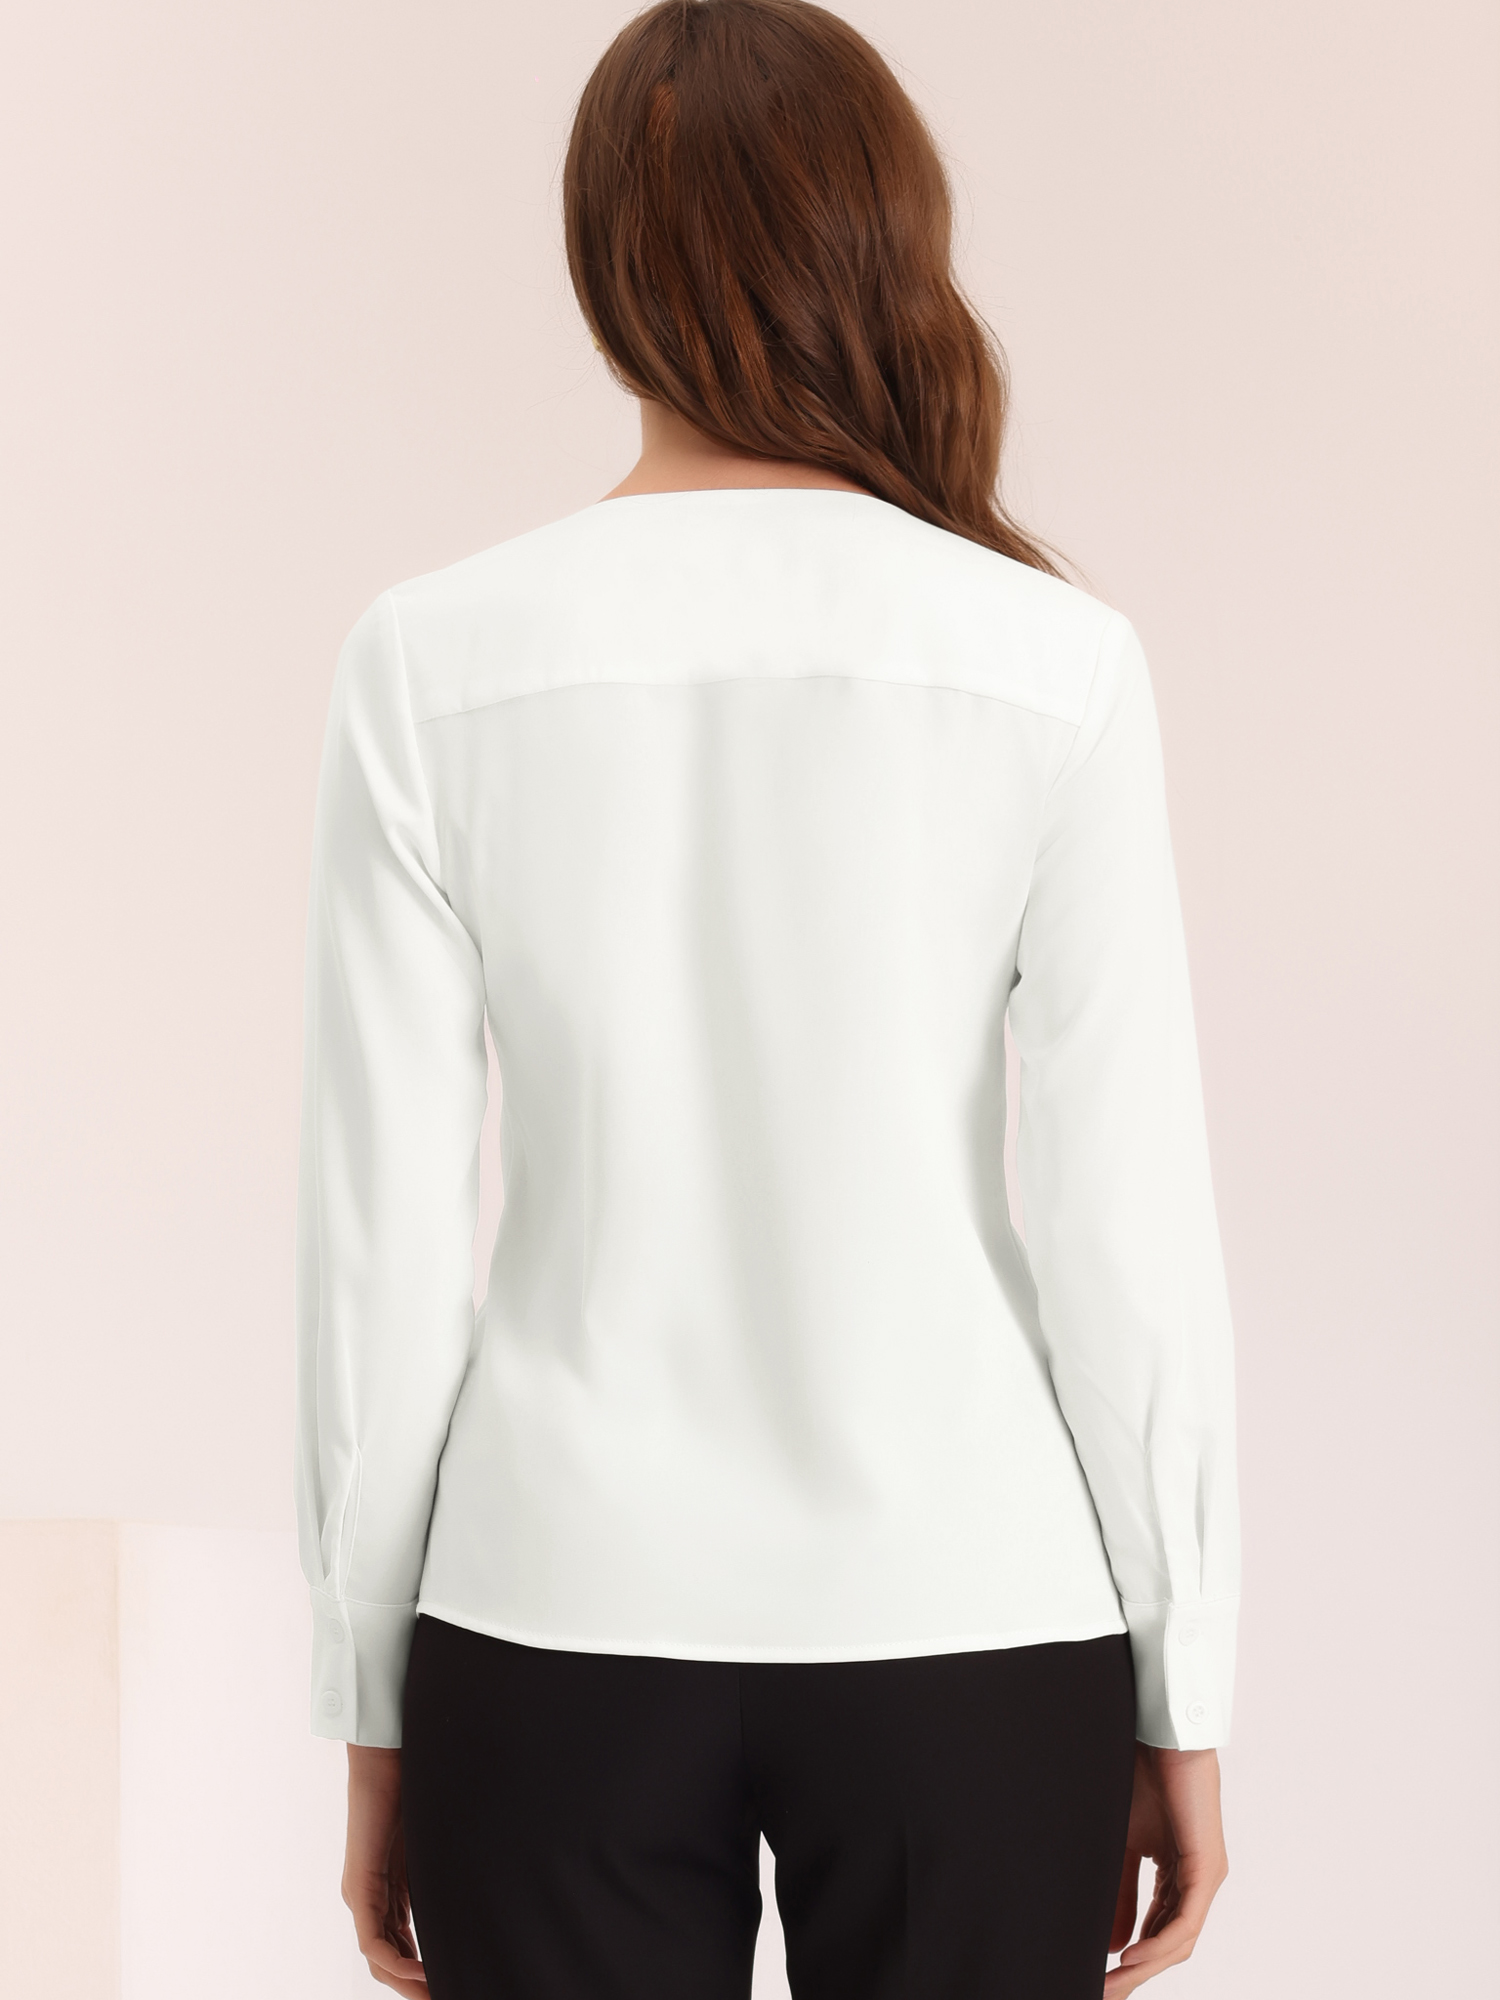 Unique Bargains Work Office Blouse for Women's Long Sleeve V Neck Blouse